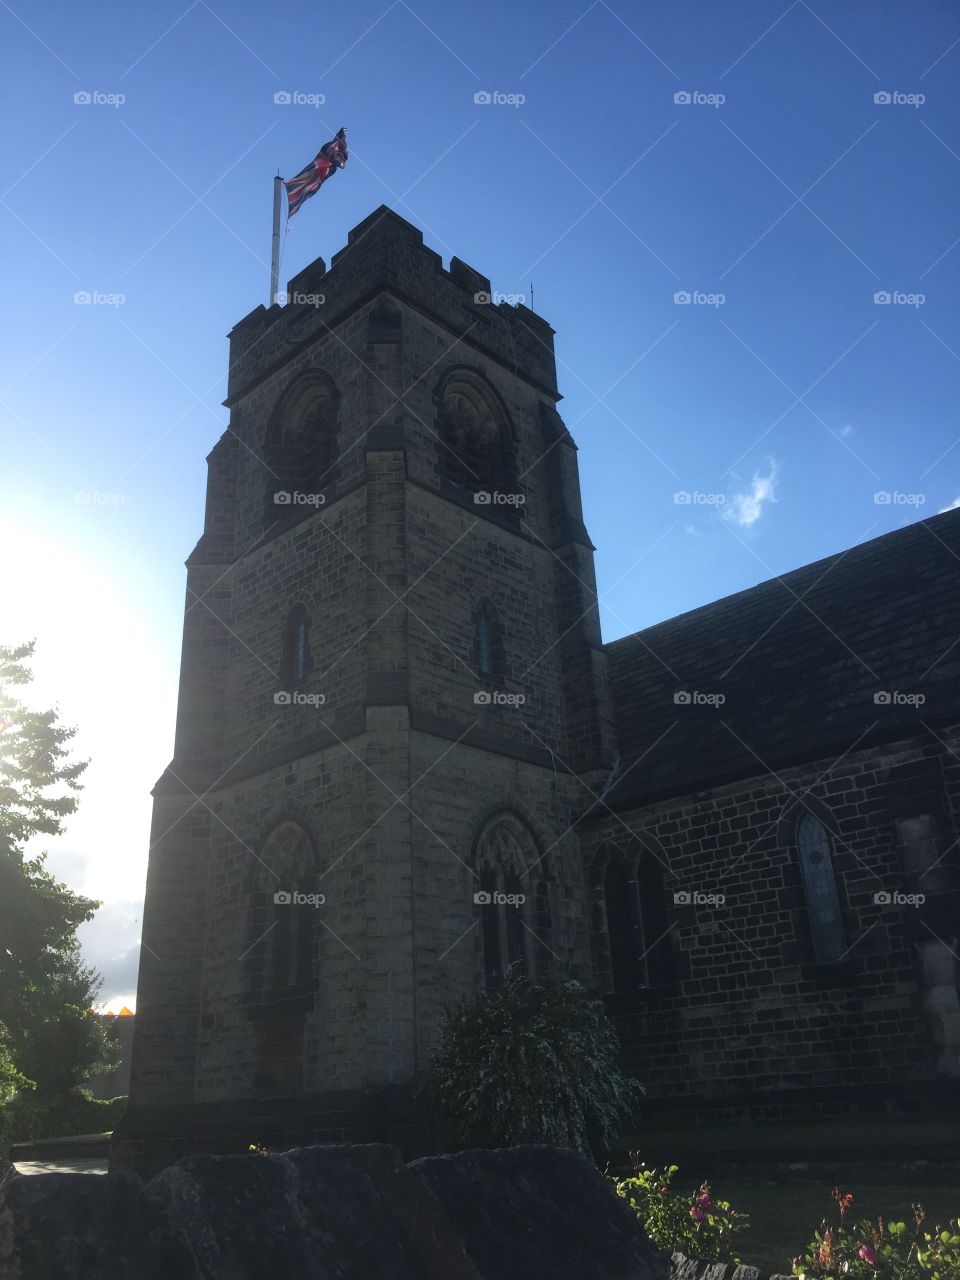 Union Jack on an English Church